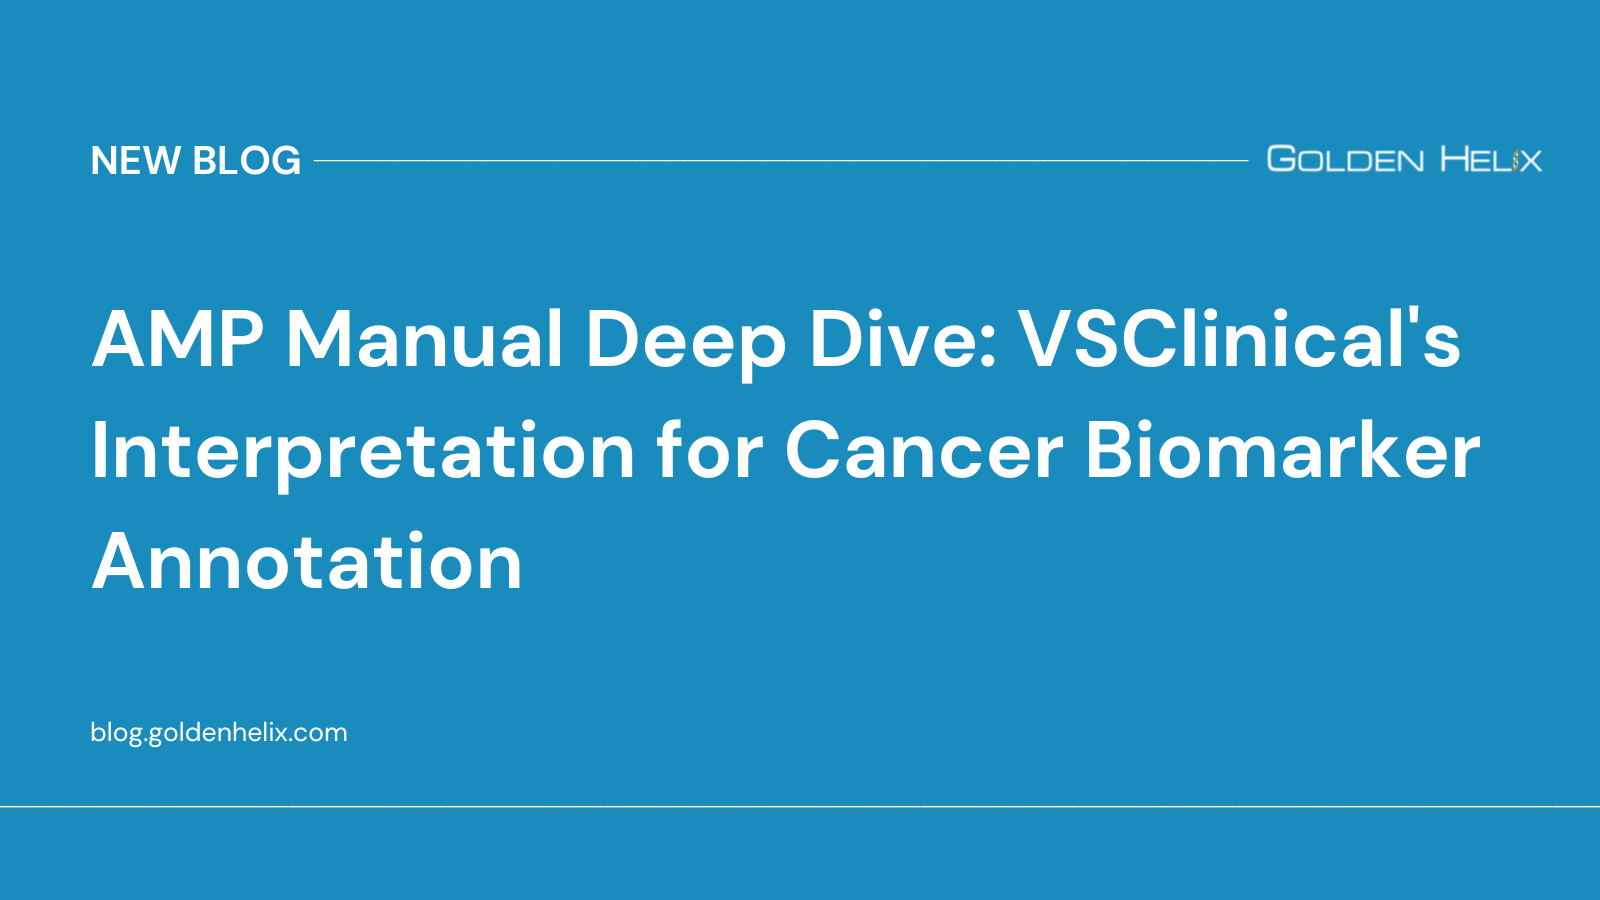 AMP Manual Deep Dive VSClinical's Interpretation for Cancer Biomarker Annotation